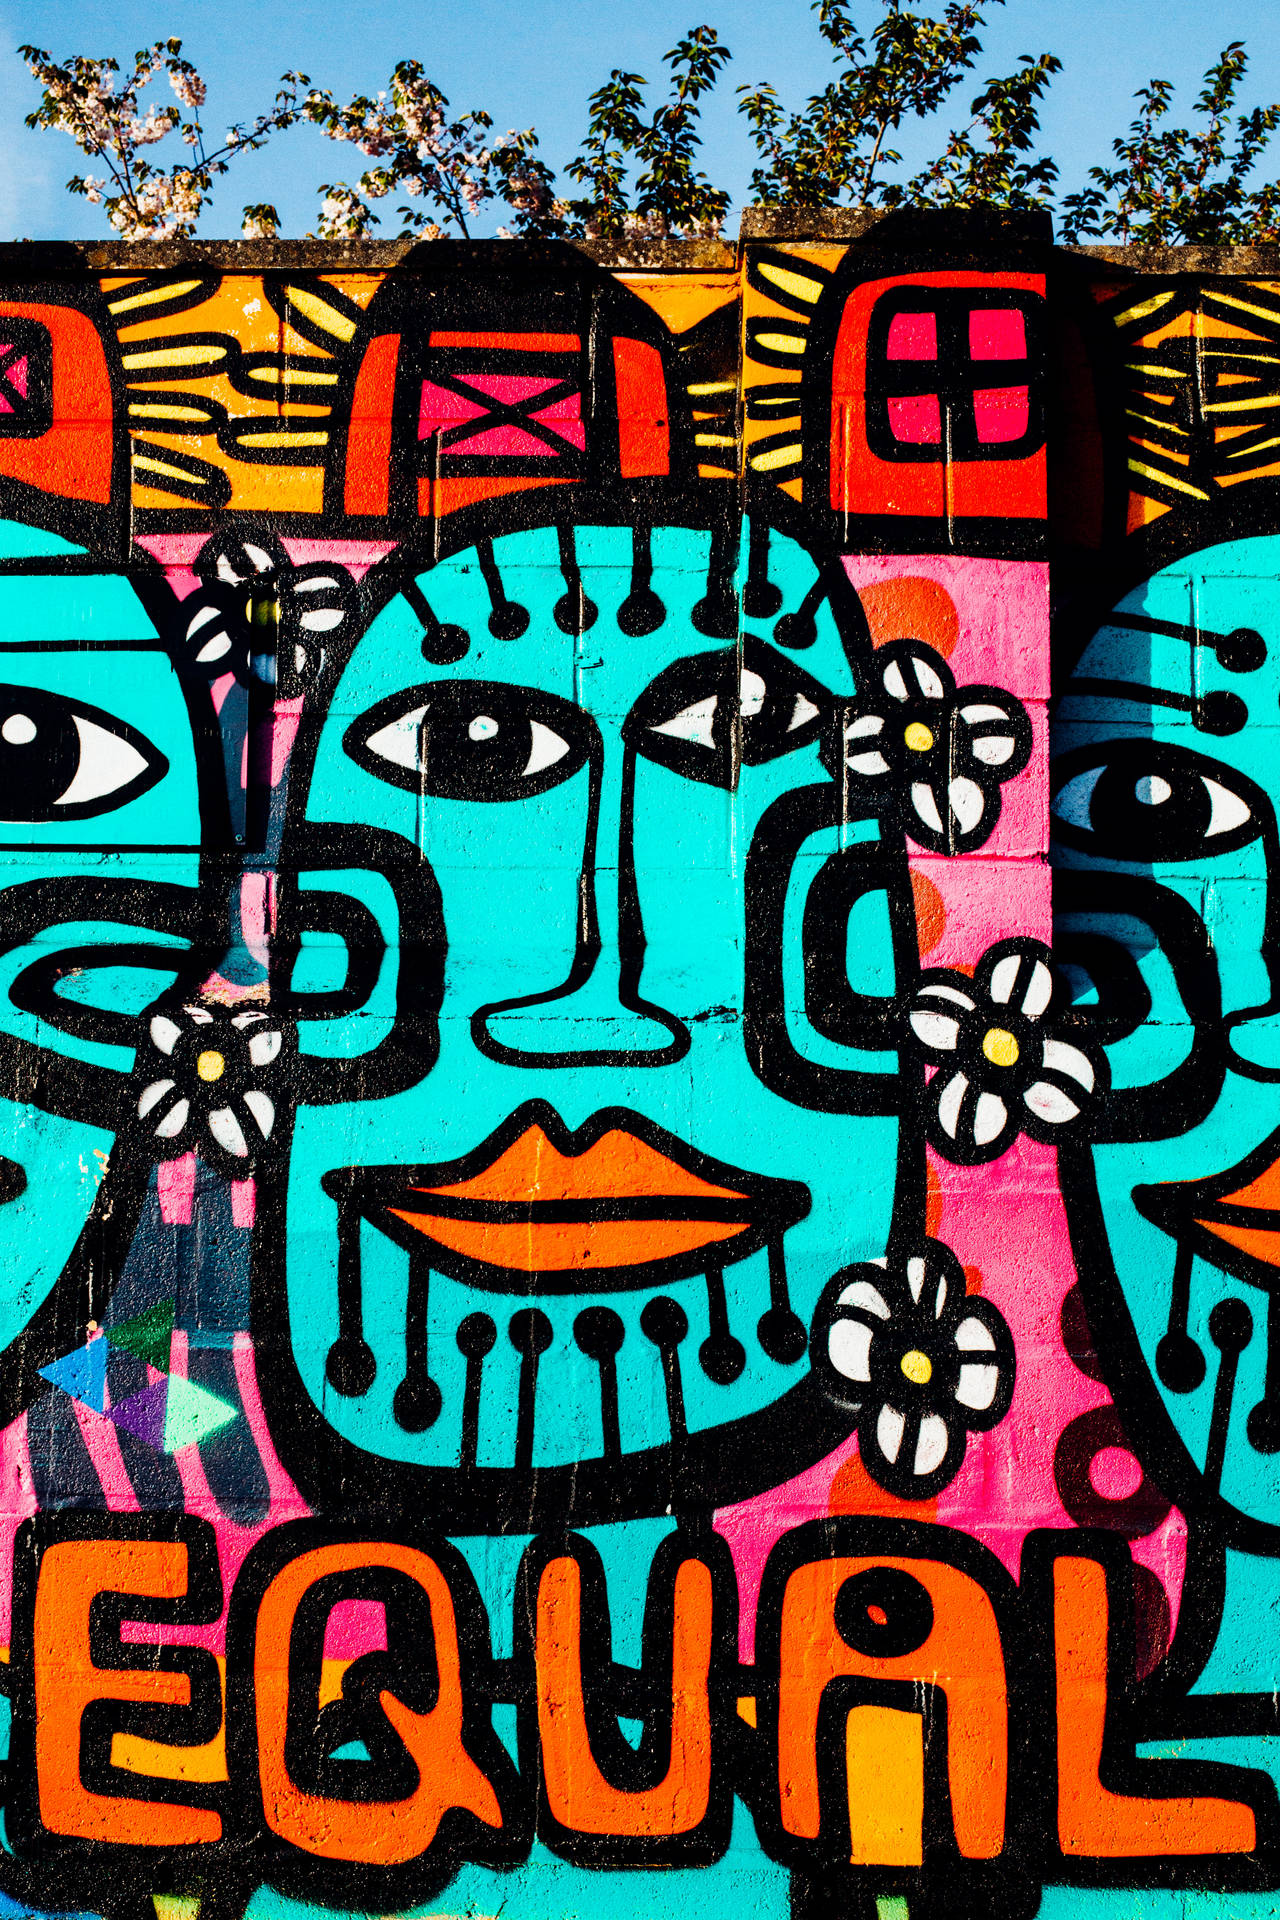 Equal Tribal Graffiti Street Art Background